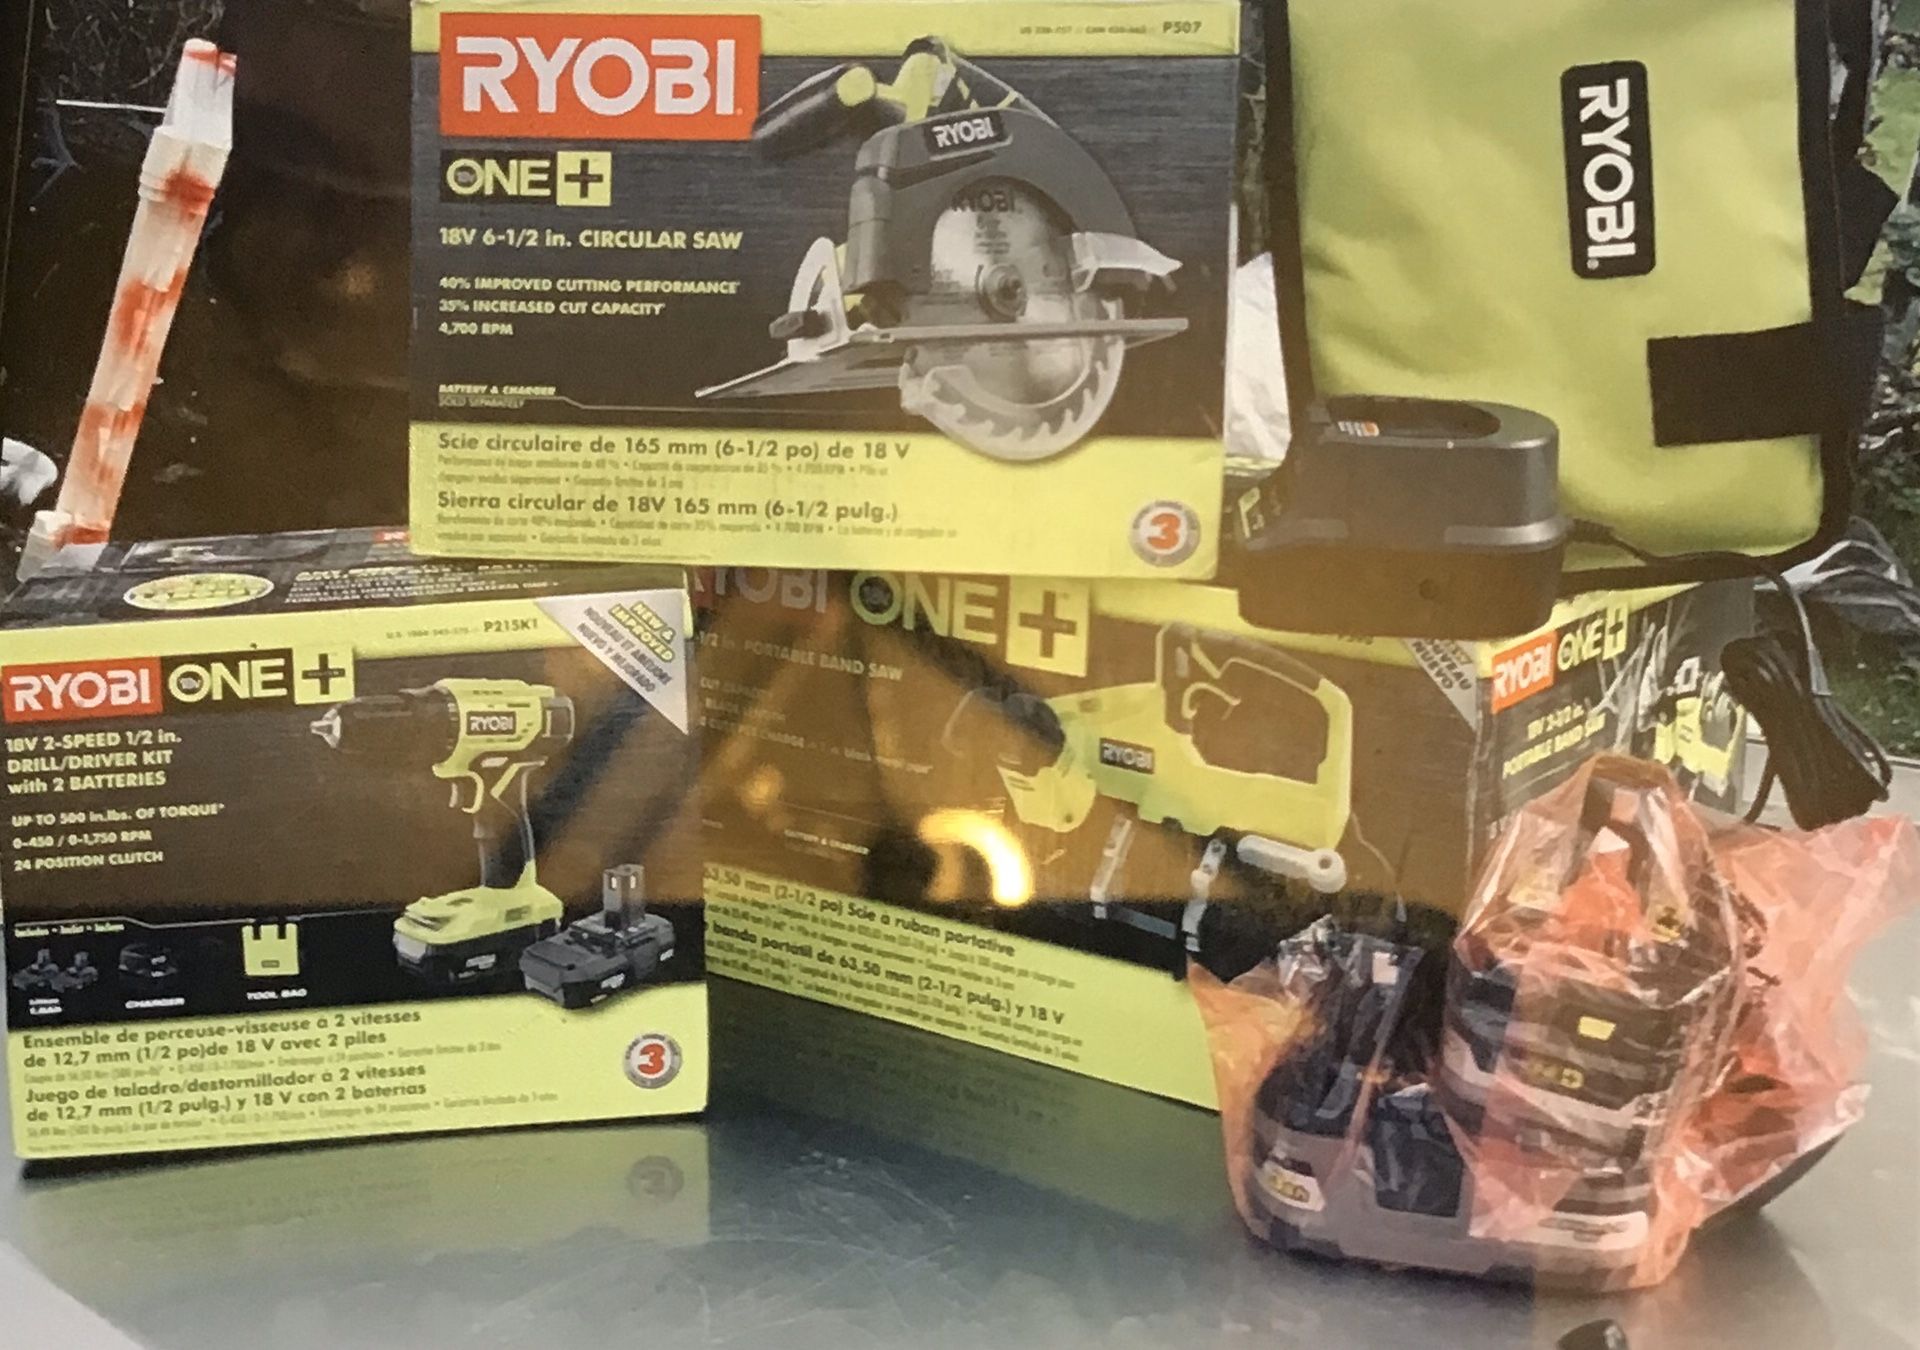 Ryobi tool bundle